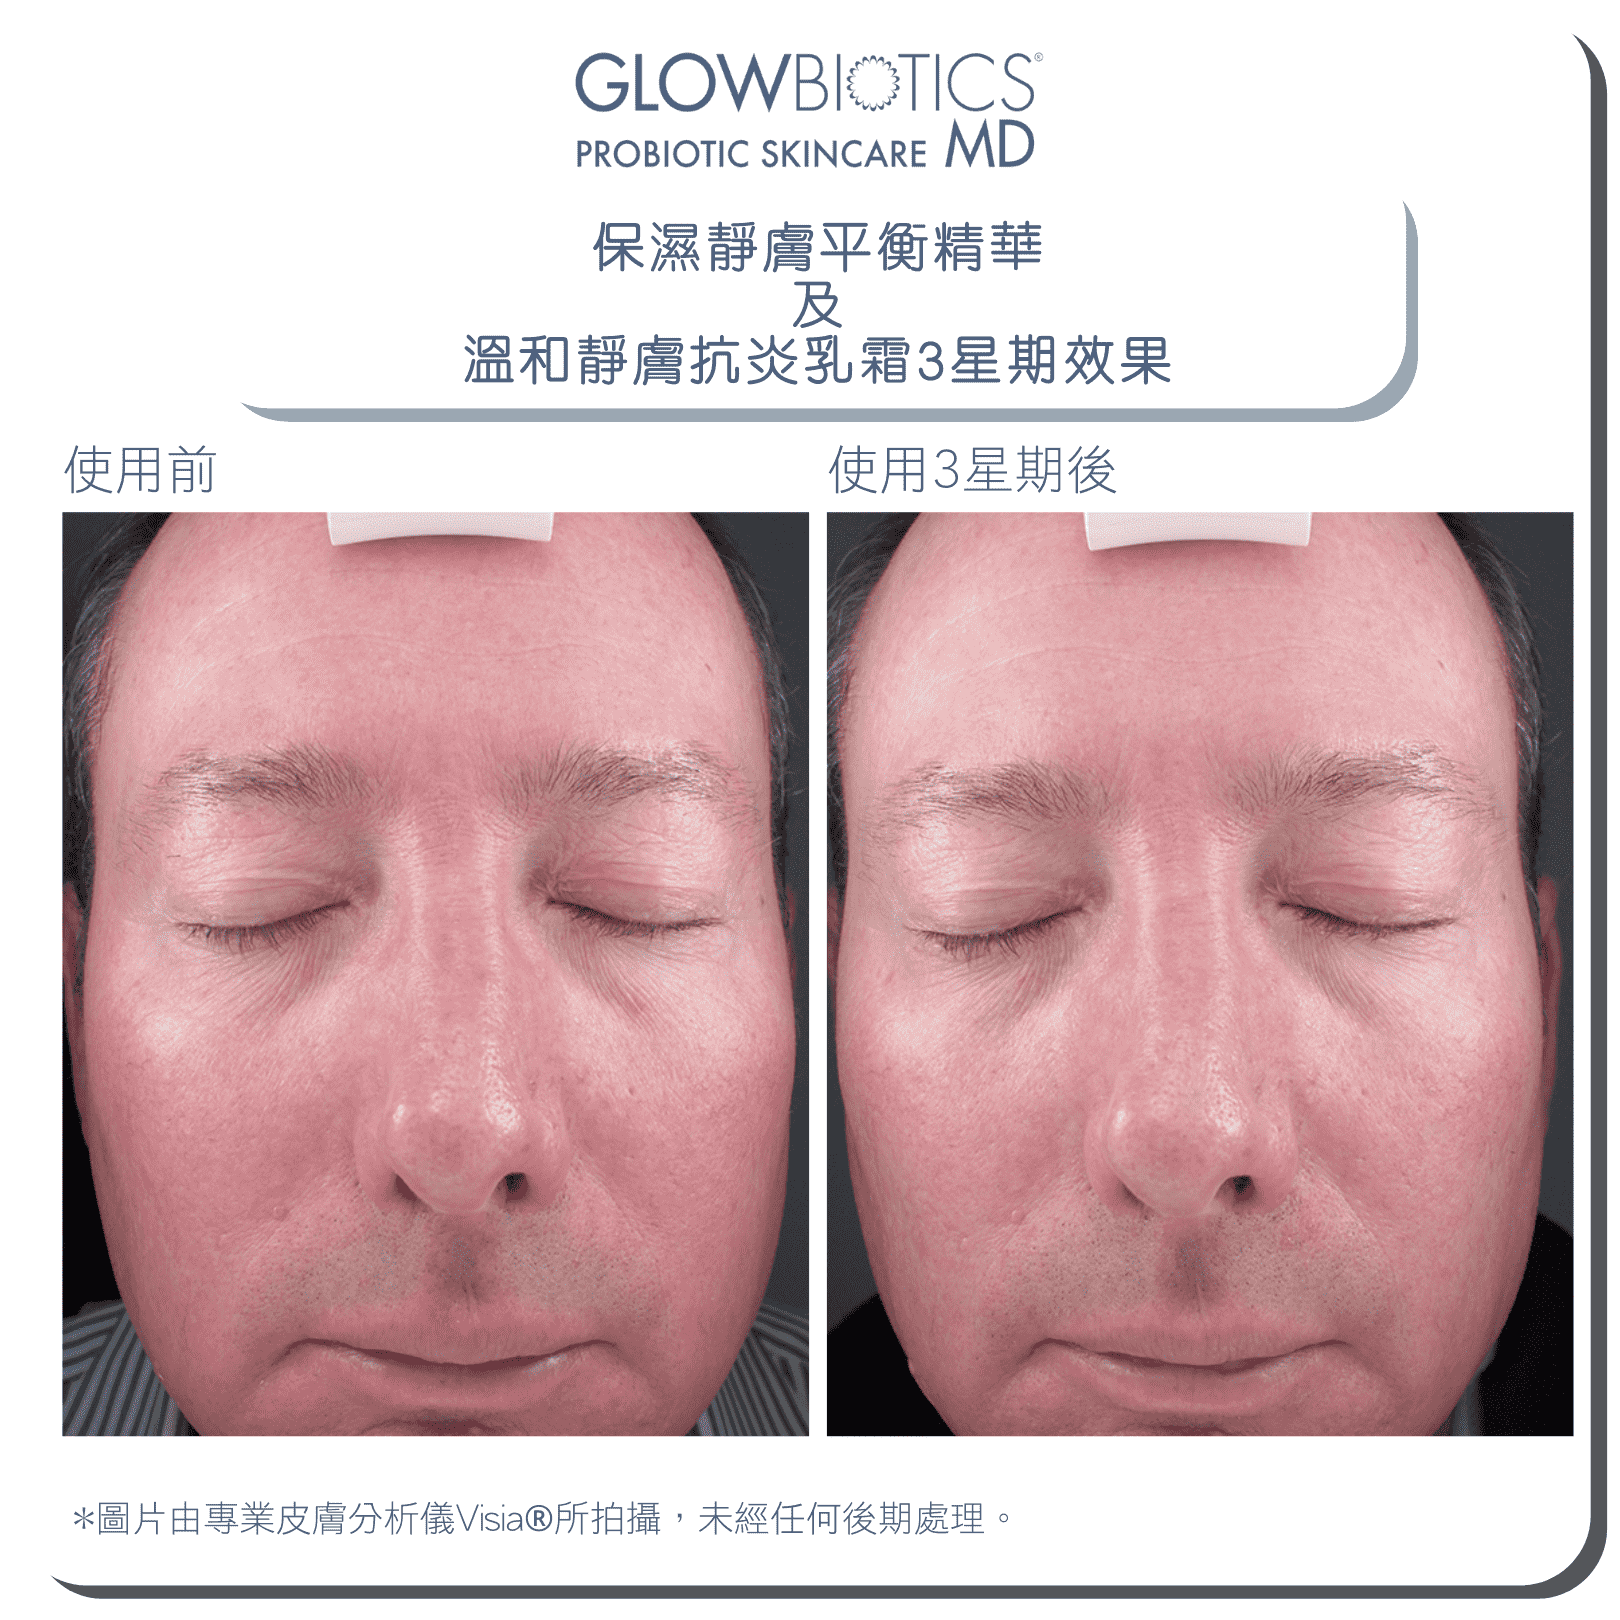 GLOWBIOTICS x 田豪祖3寶優惠益生菌抗敏保濕套裝 - Glowbiotics HK